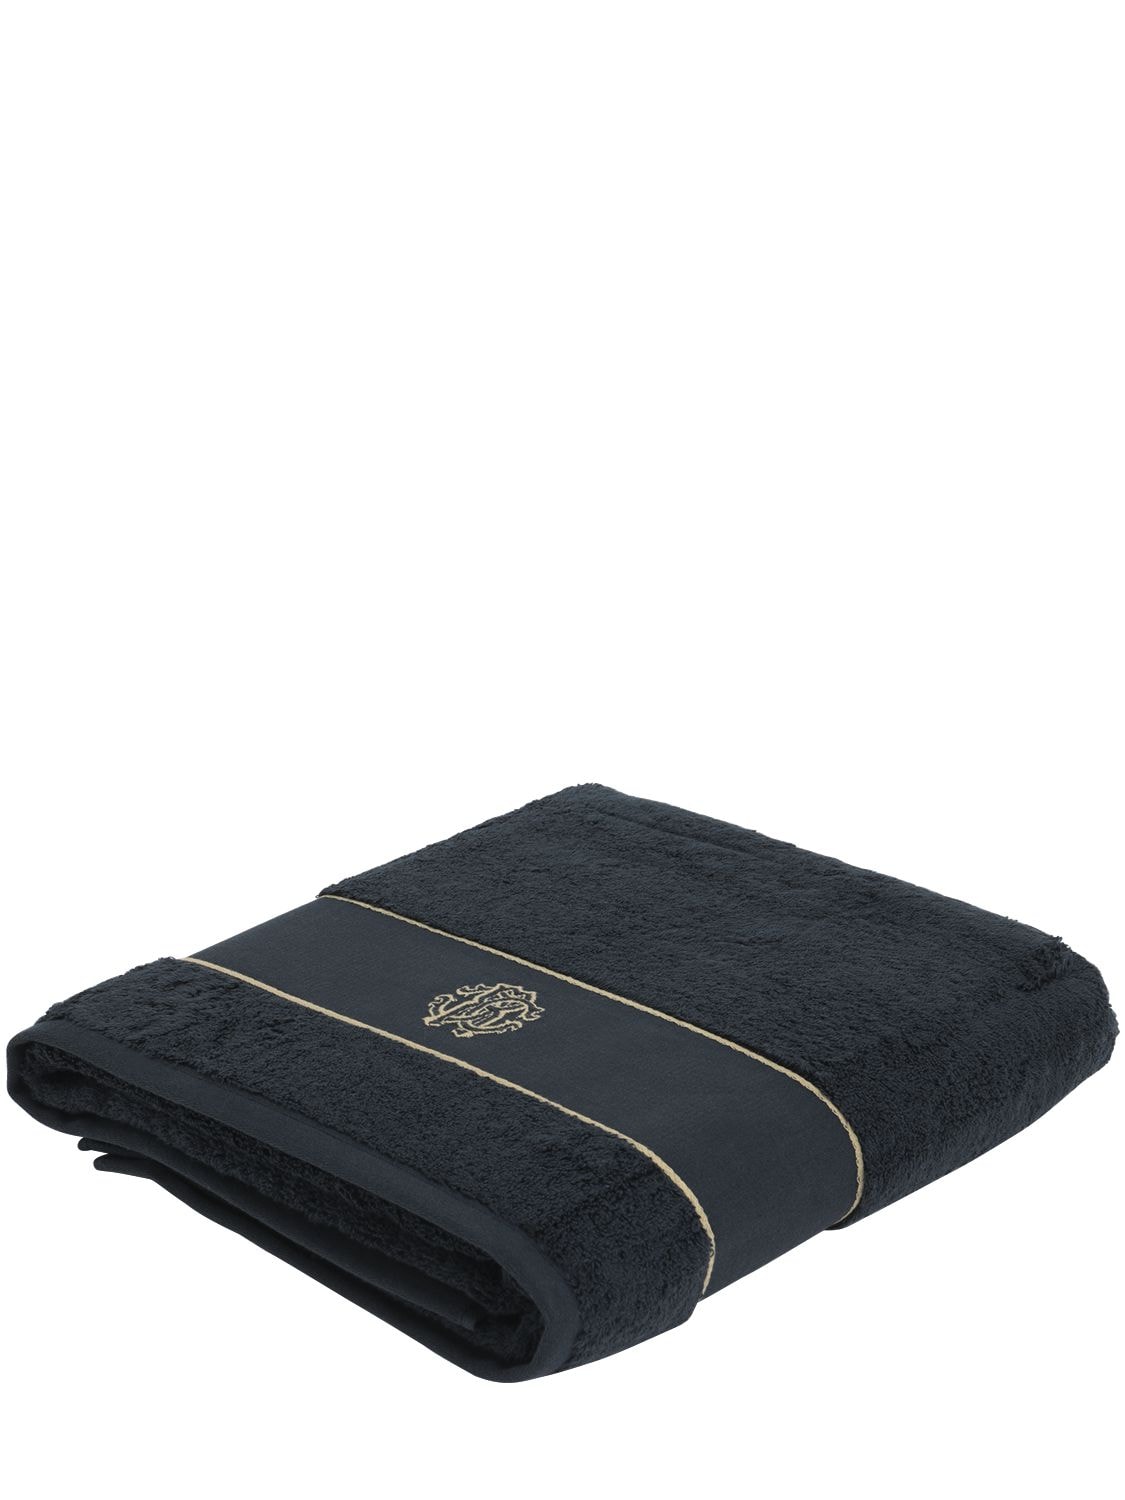 Shop Roberto Cavalli Gold New Beach Towel In Black